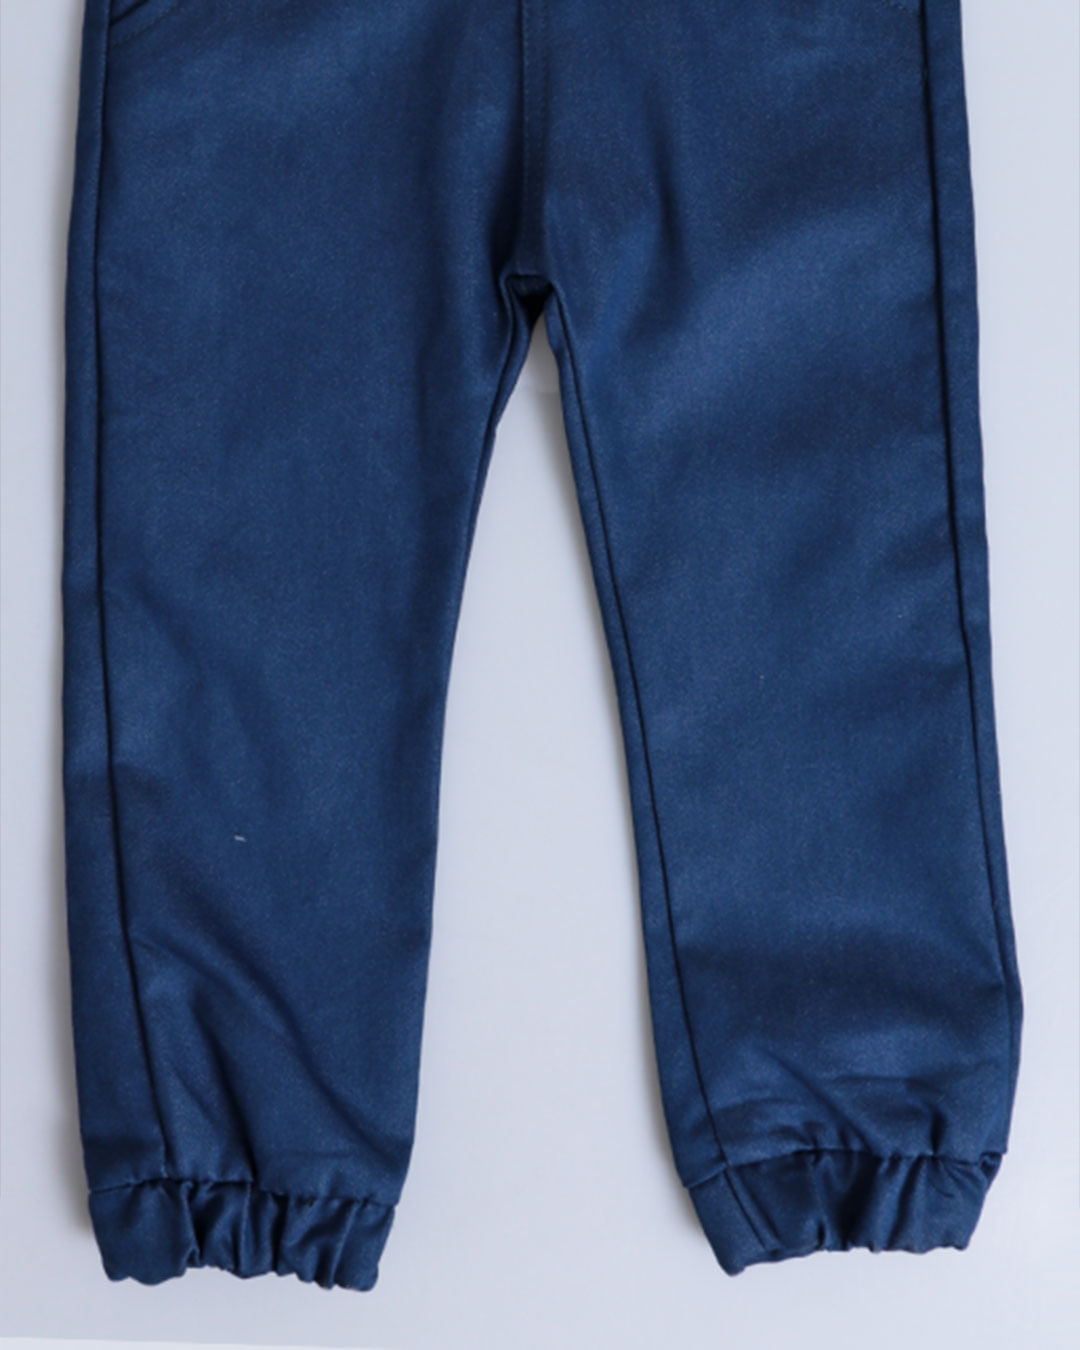 39531000030045-blue-jeans-medio-4